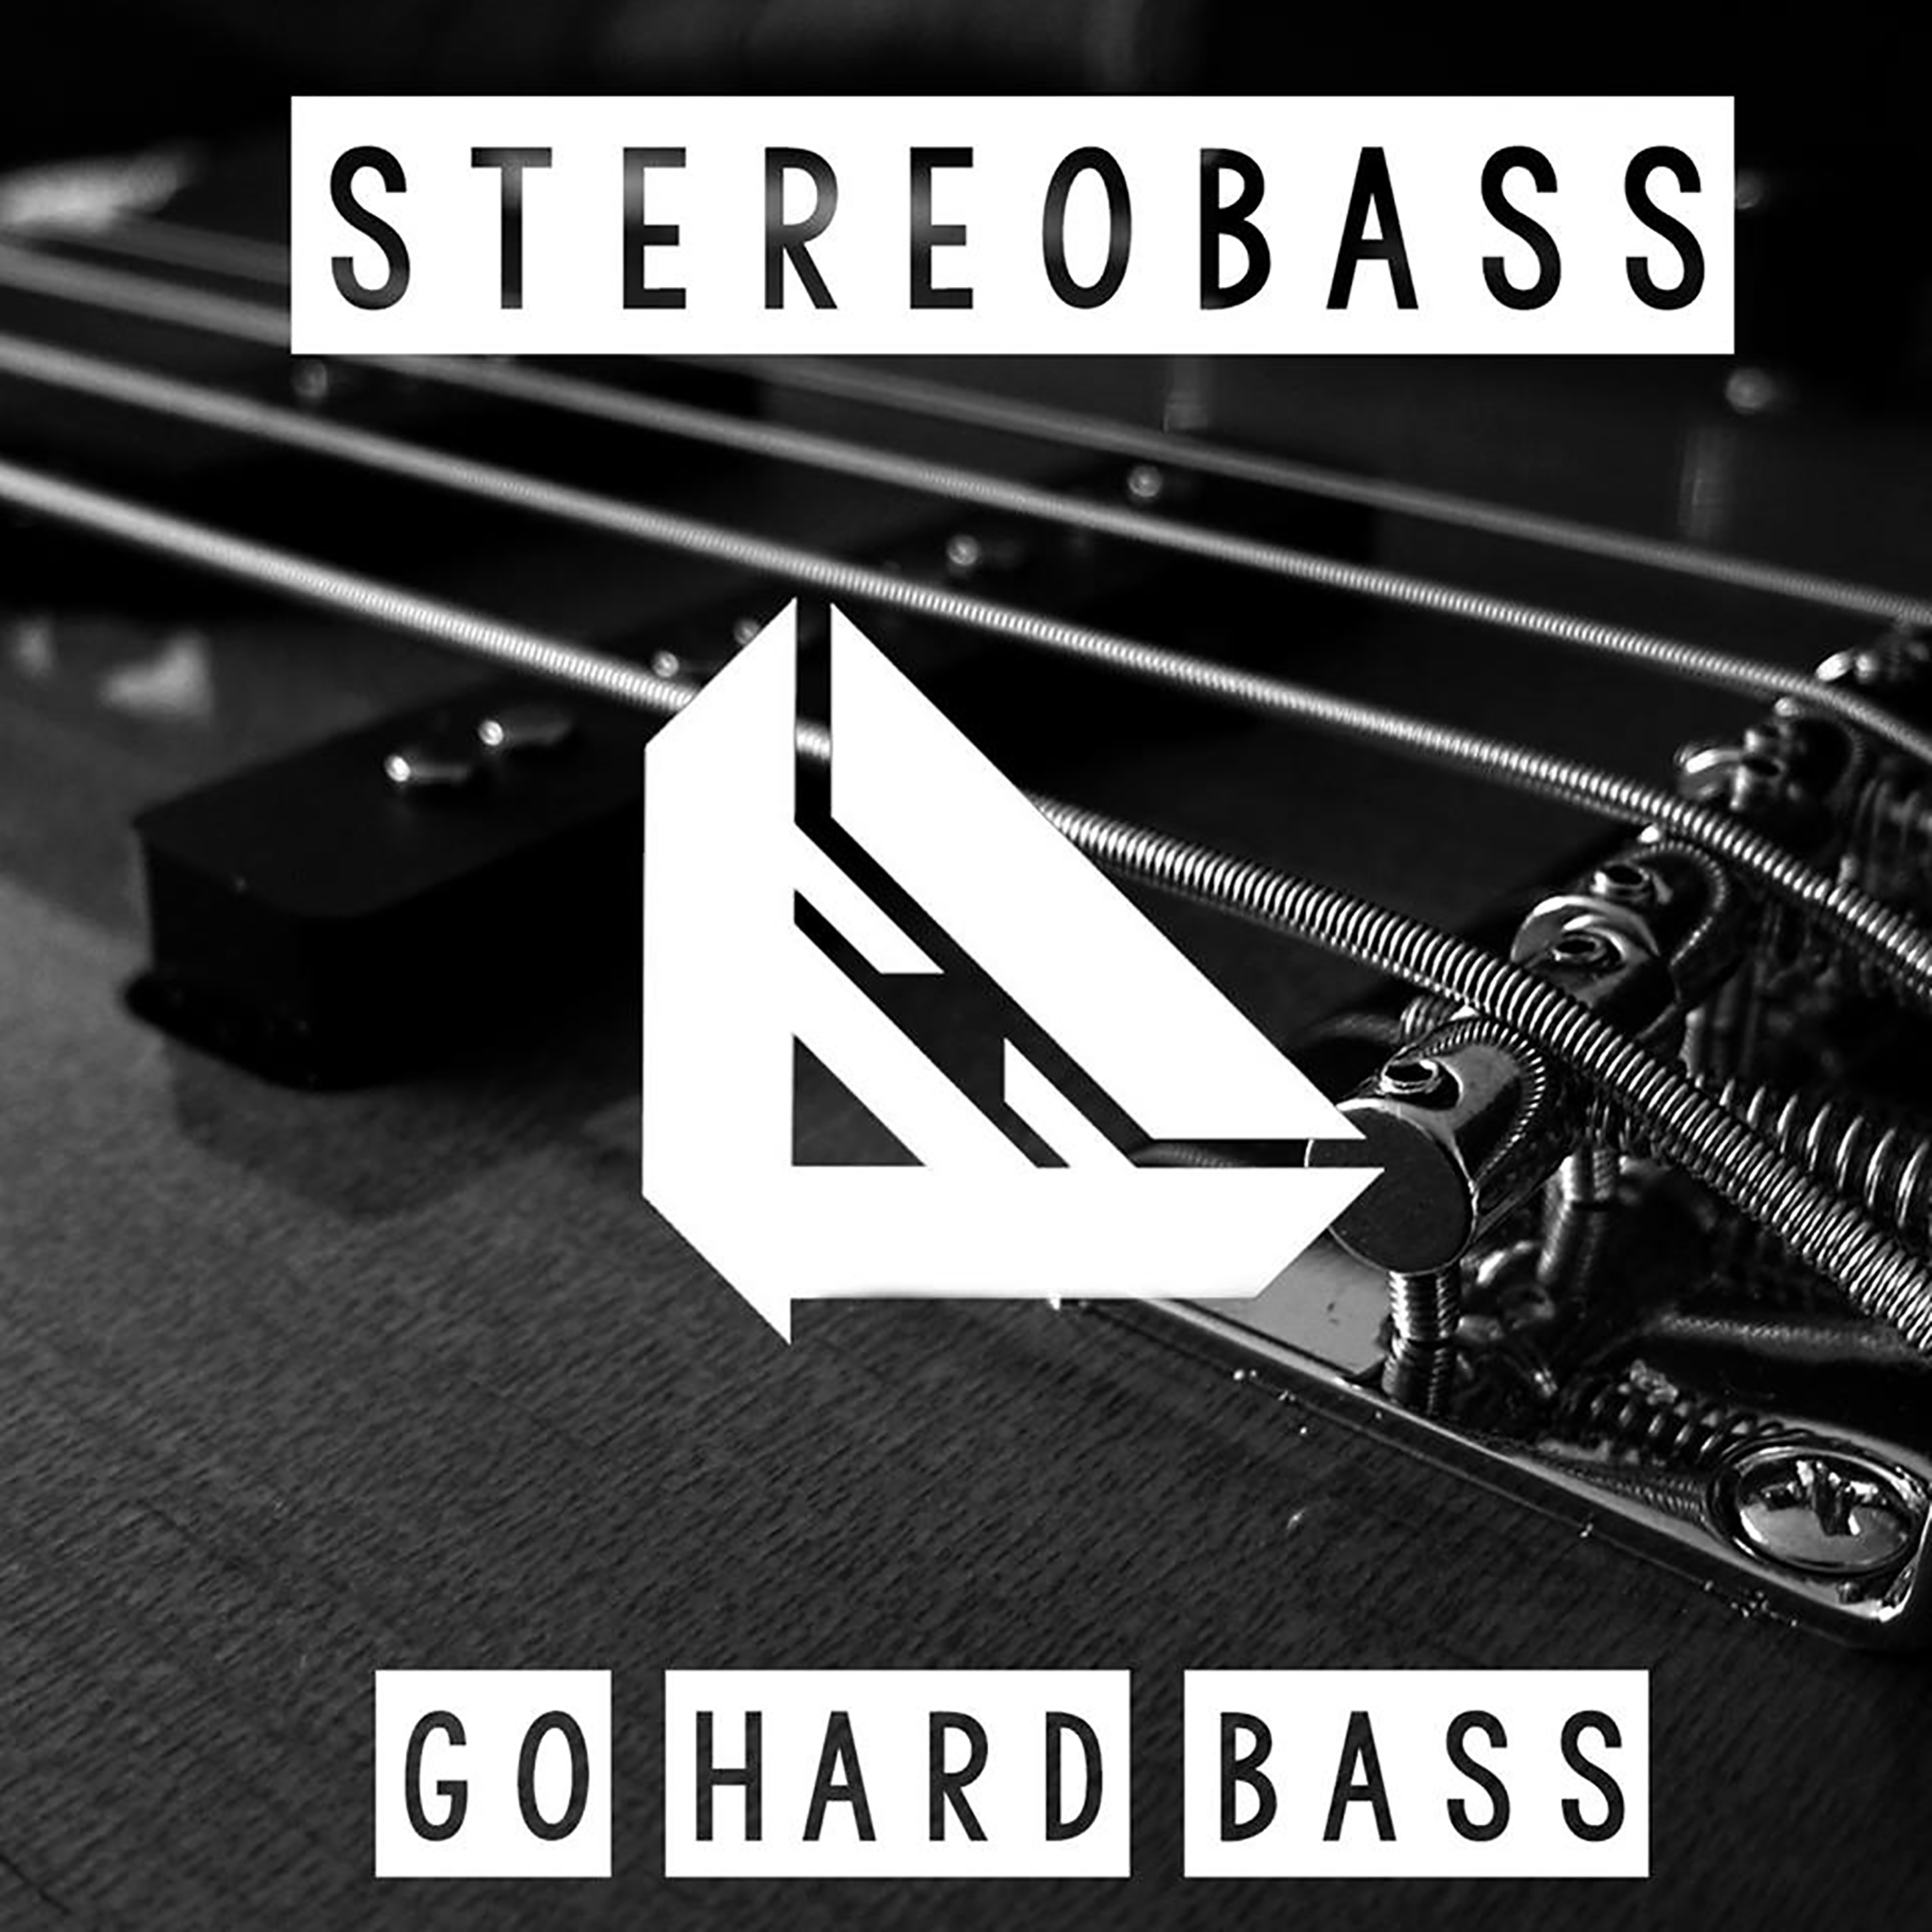 Песня слов басс. Жесткий басс. Go hard текст. Музыка hard Bass. Bass фото текст.